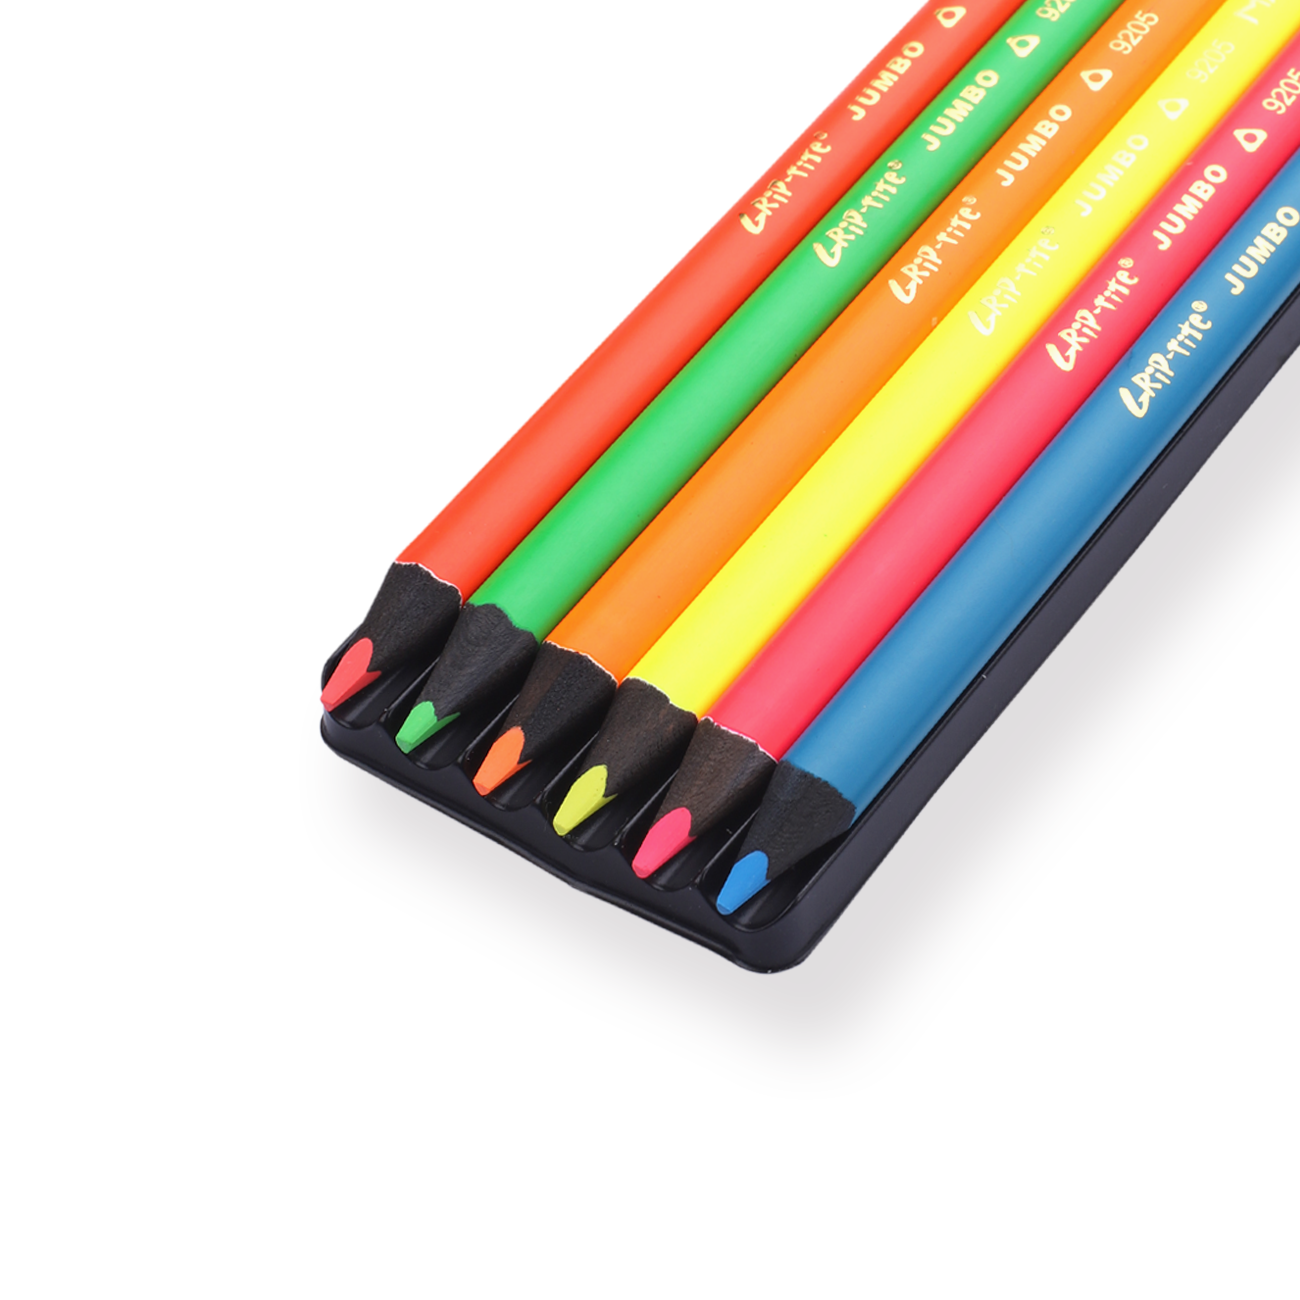 Jumbo Brights Neon Colored Pencils - Set of 6